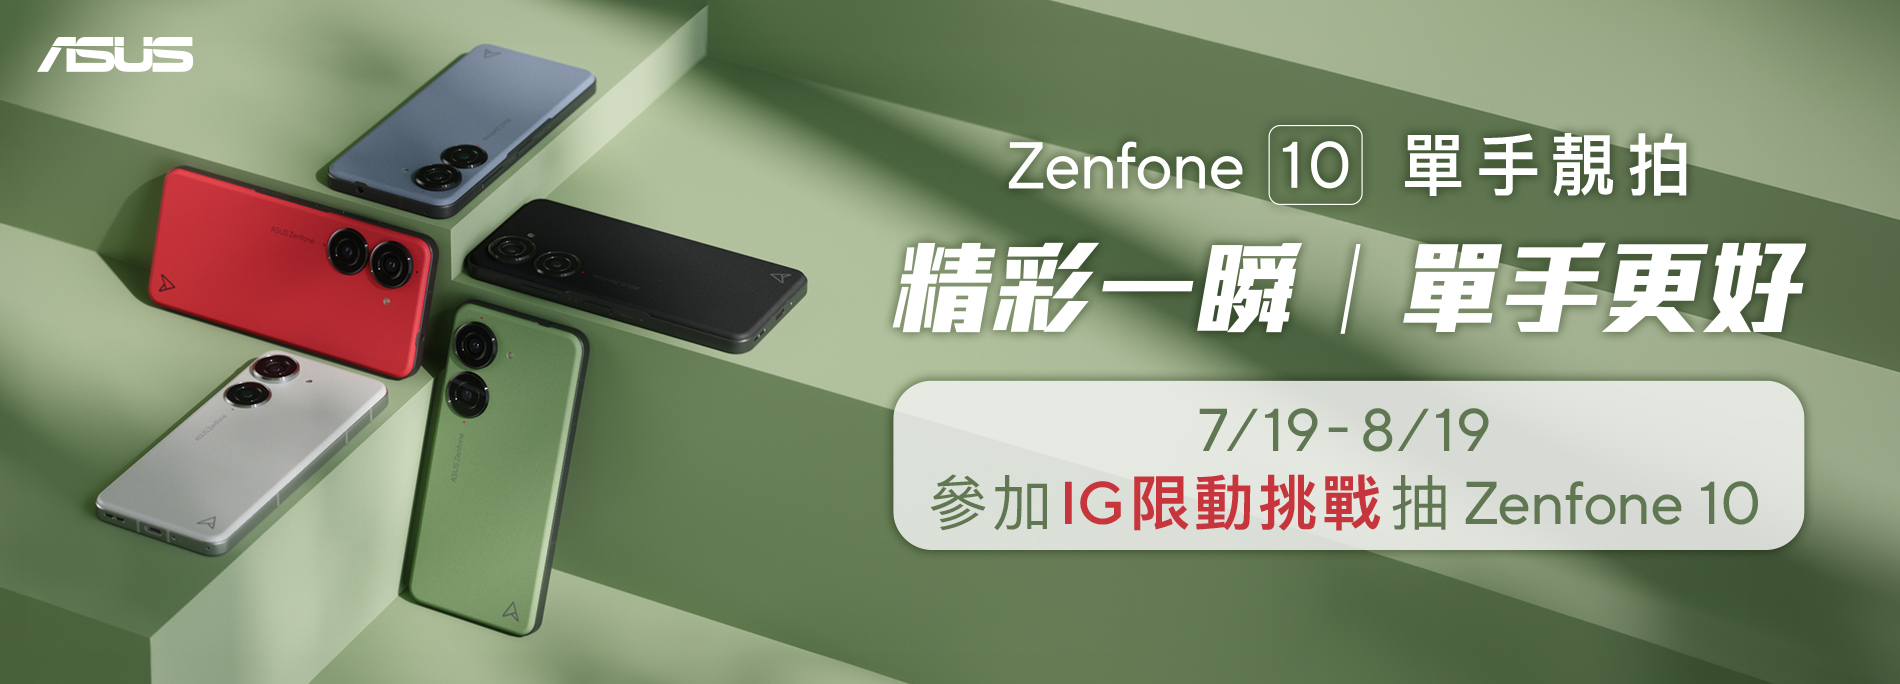 【Zenfone 10單手靚拍】精彩一瞬，單手更好